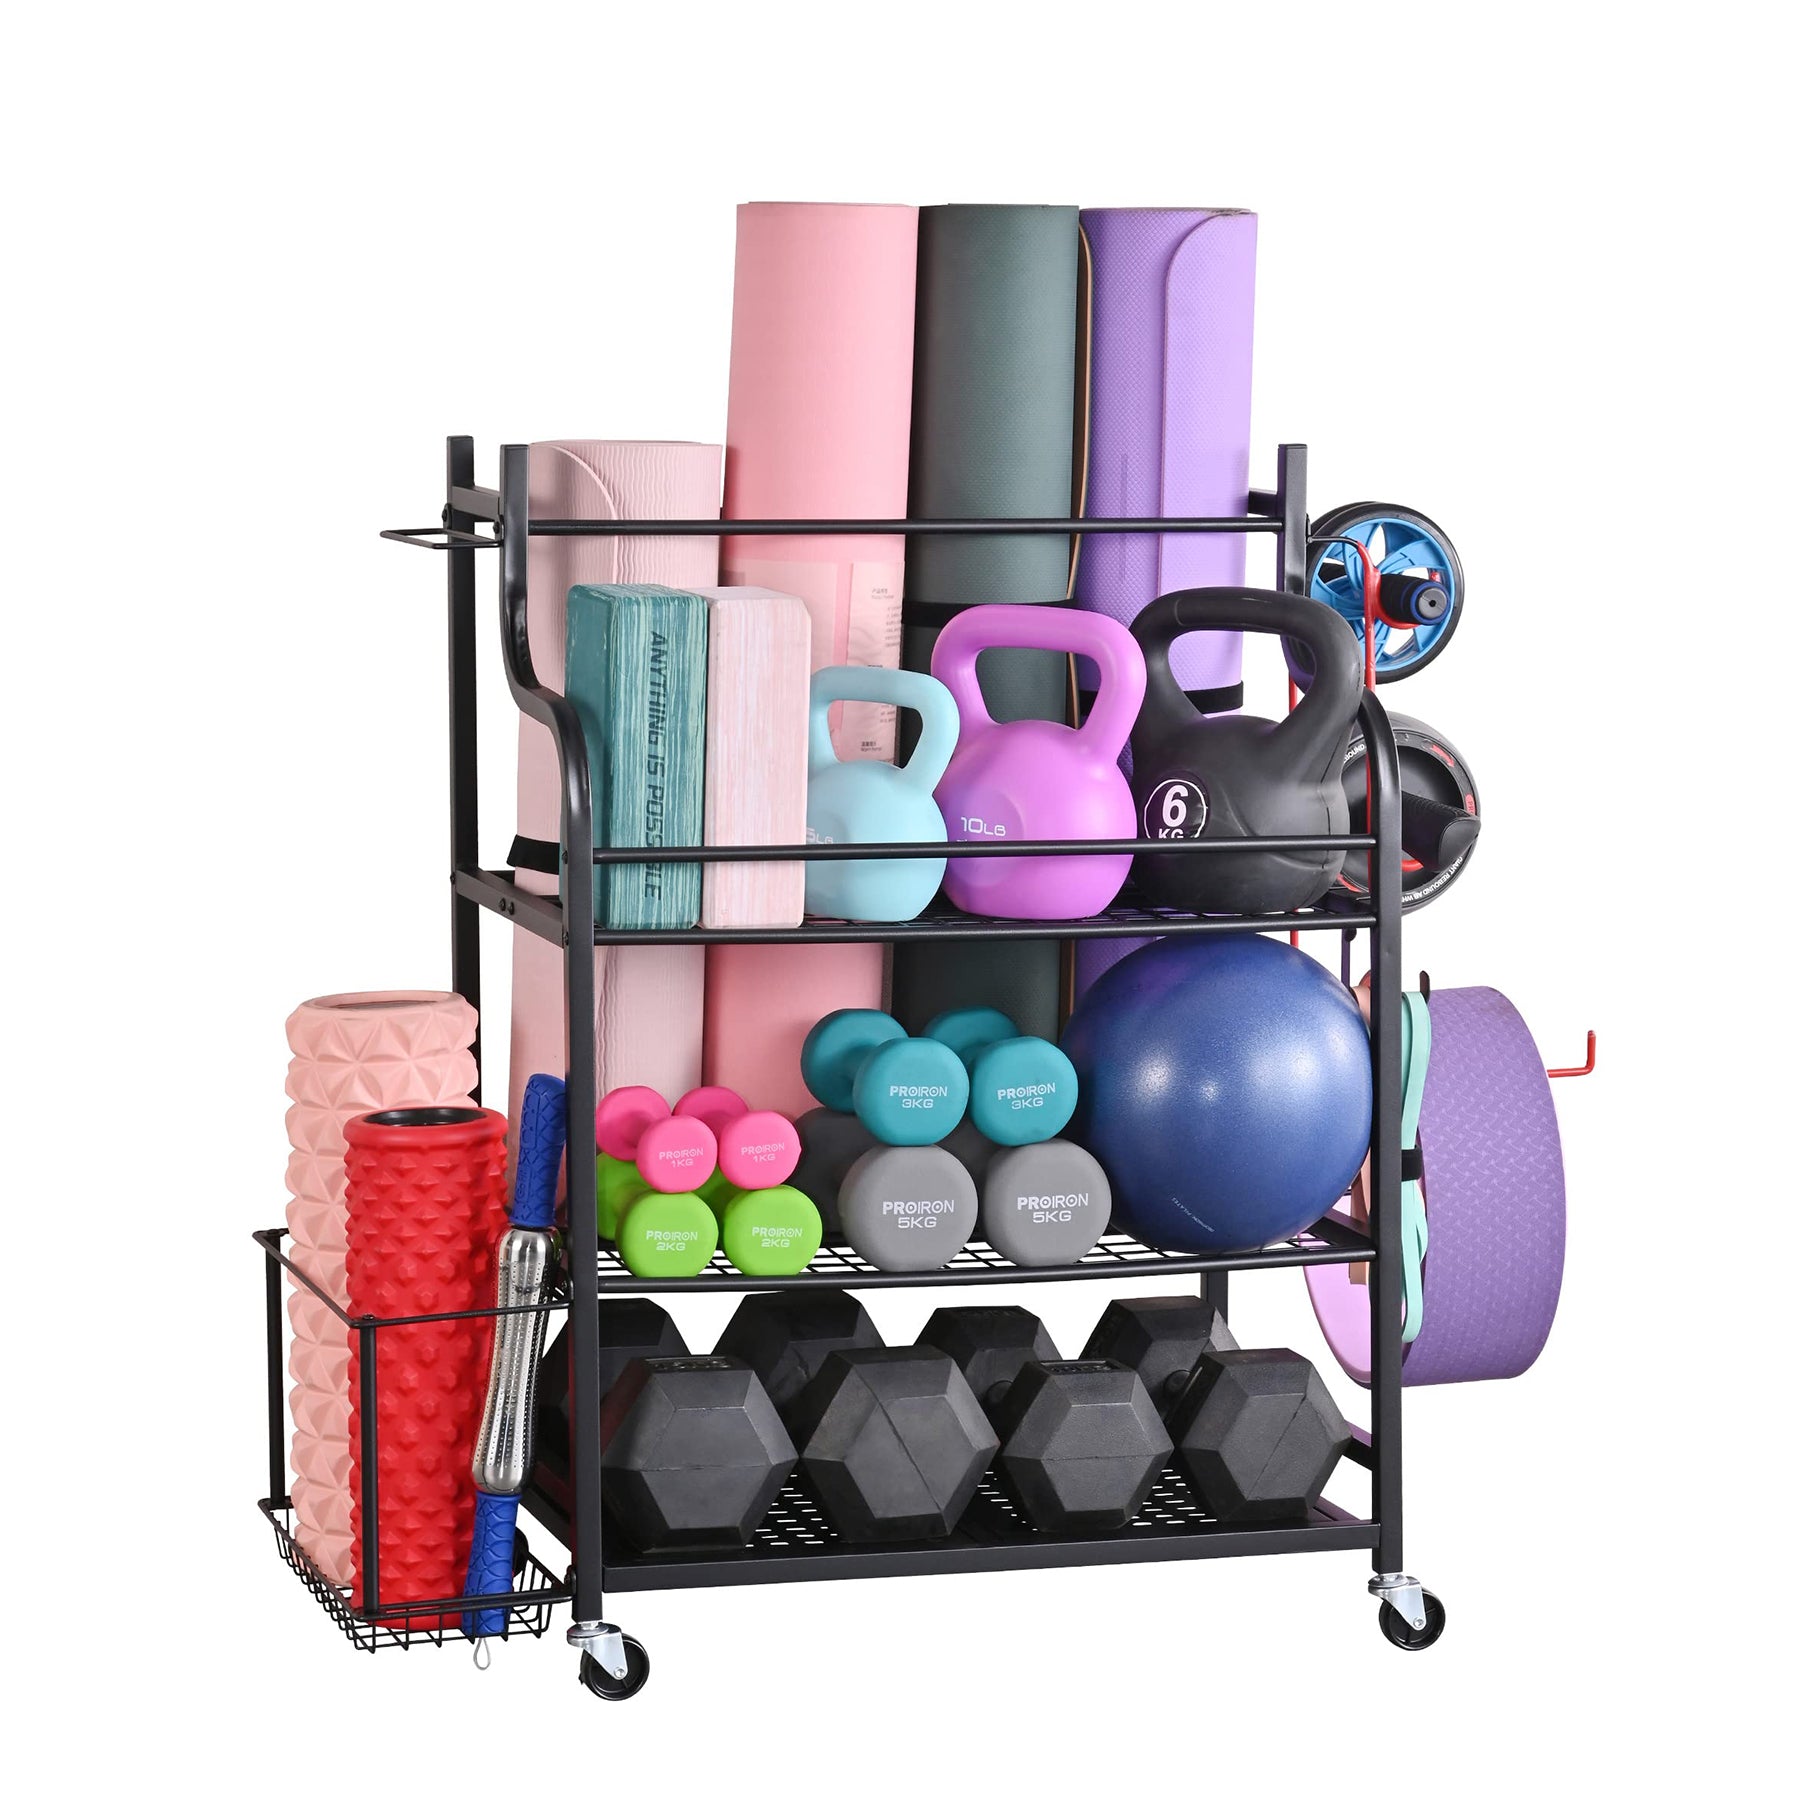 Mythinglogic Yoga Mat Storage Racks, Home Gym Weight Rack Storage